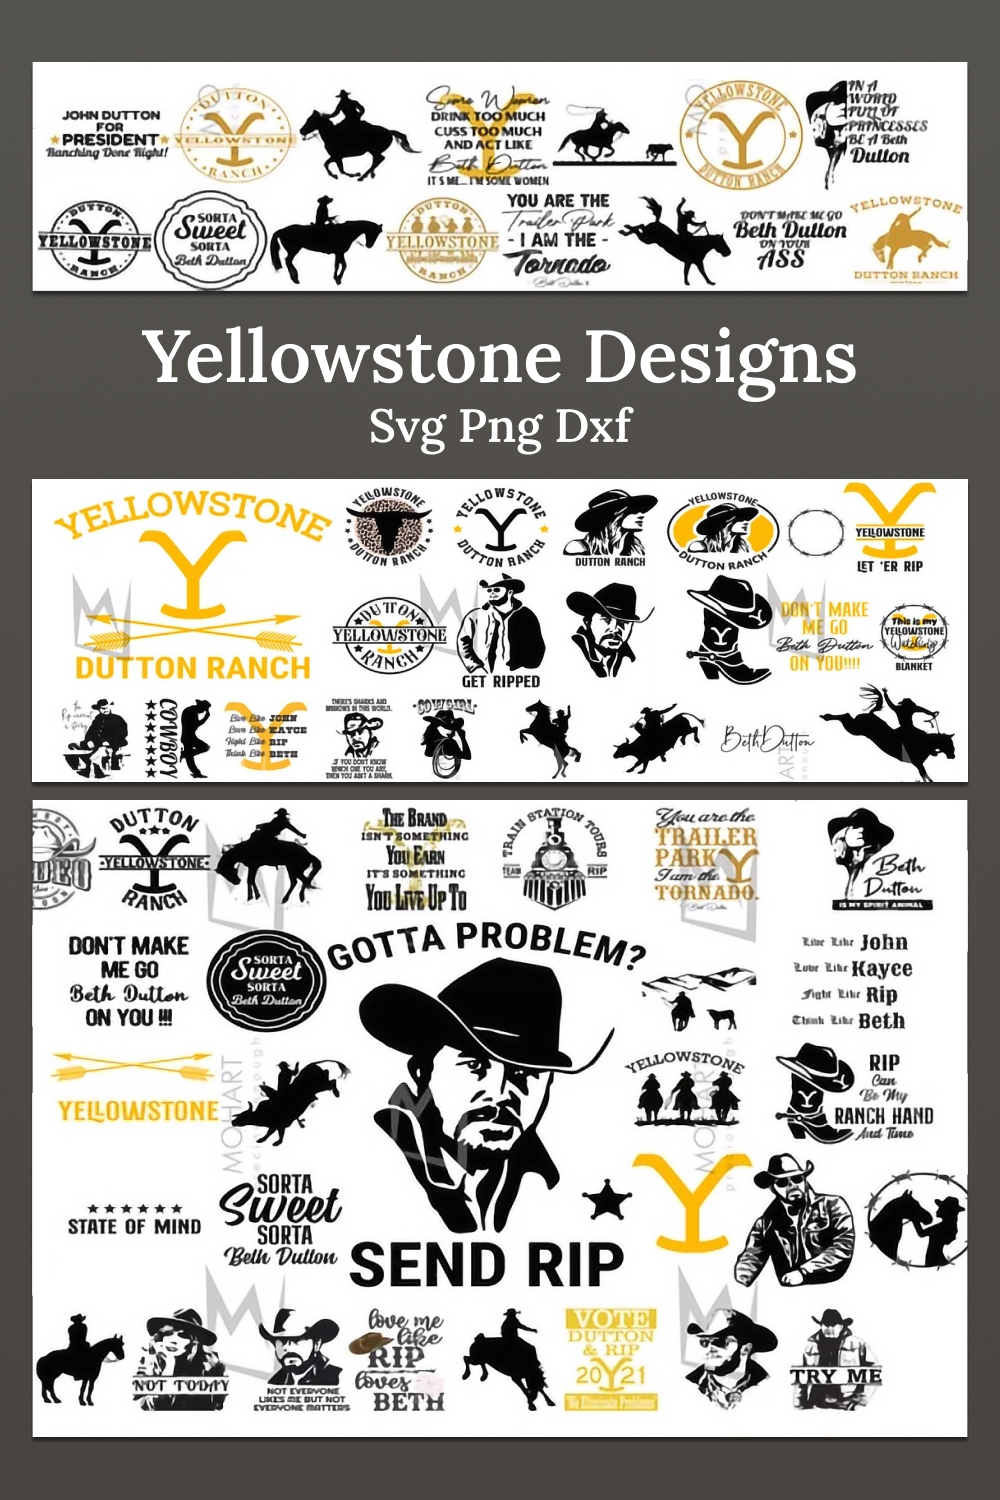 Yellowstone designs of pinterest.